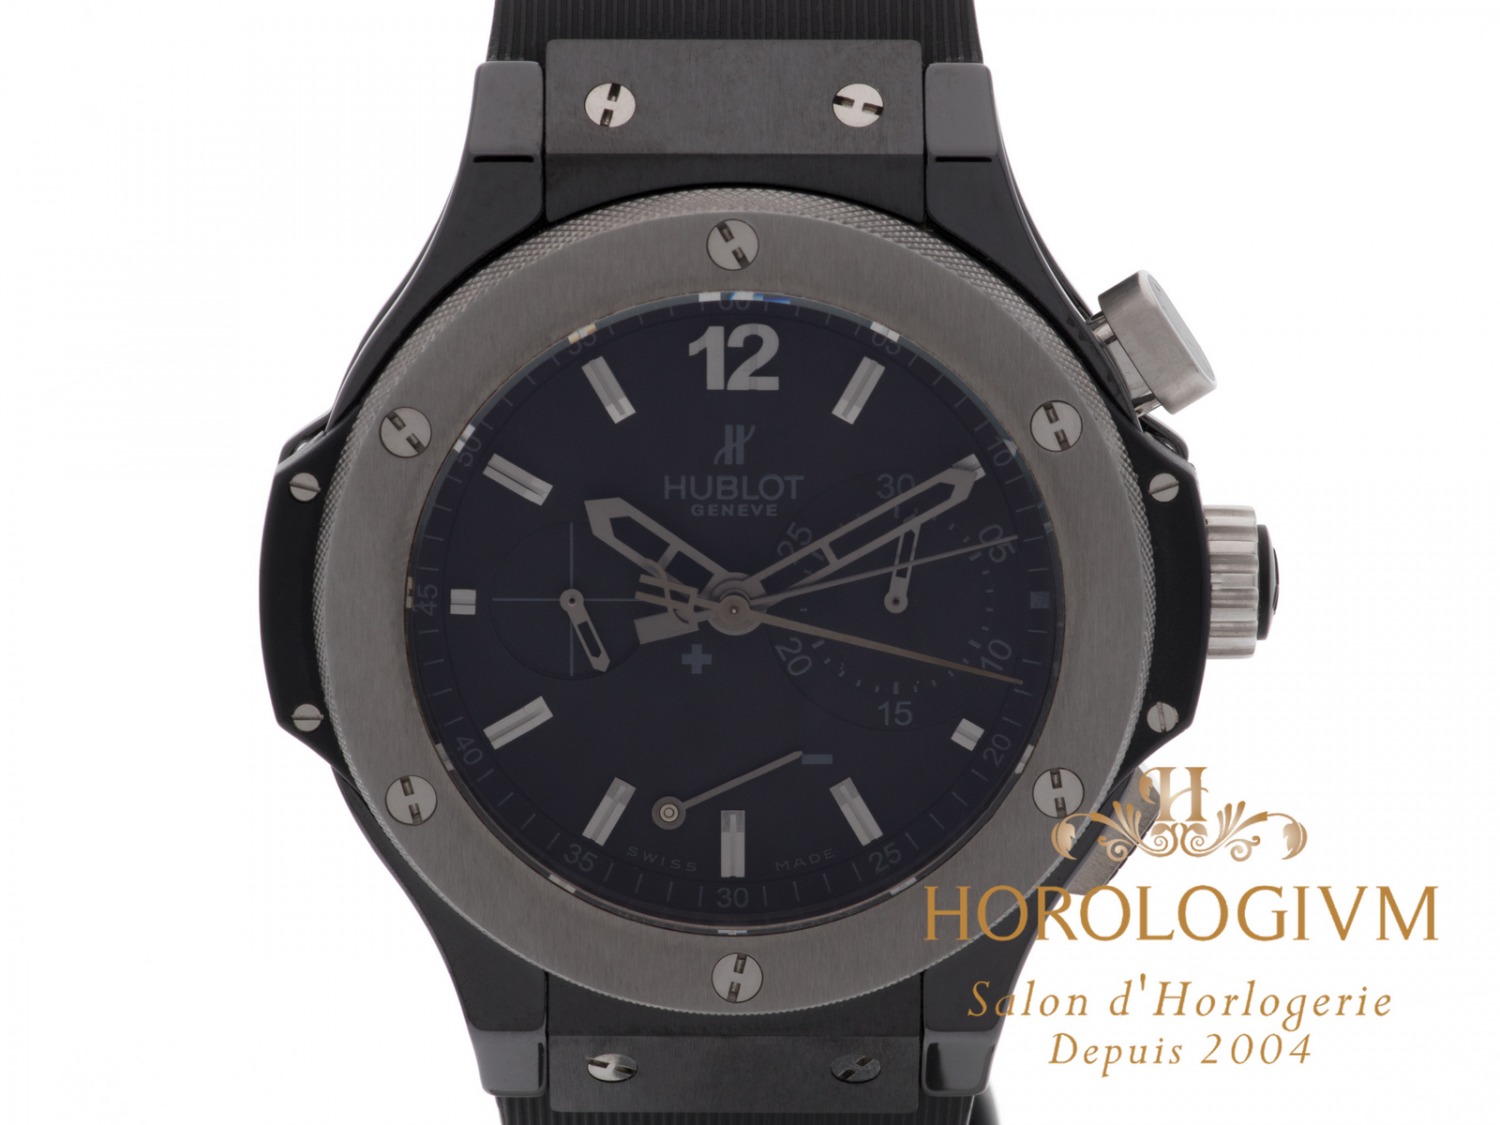 Hublot Big Bang Ice Bang Rattrapante 44MM Ref. 309.CK.1140.RX watch, black (case) and brushed grey (bezel)